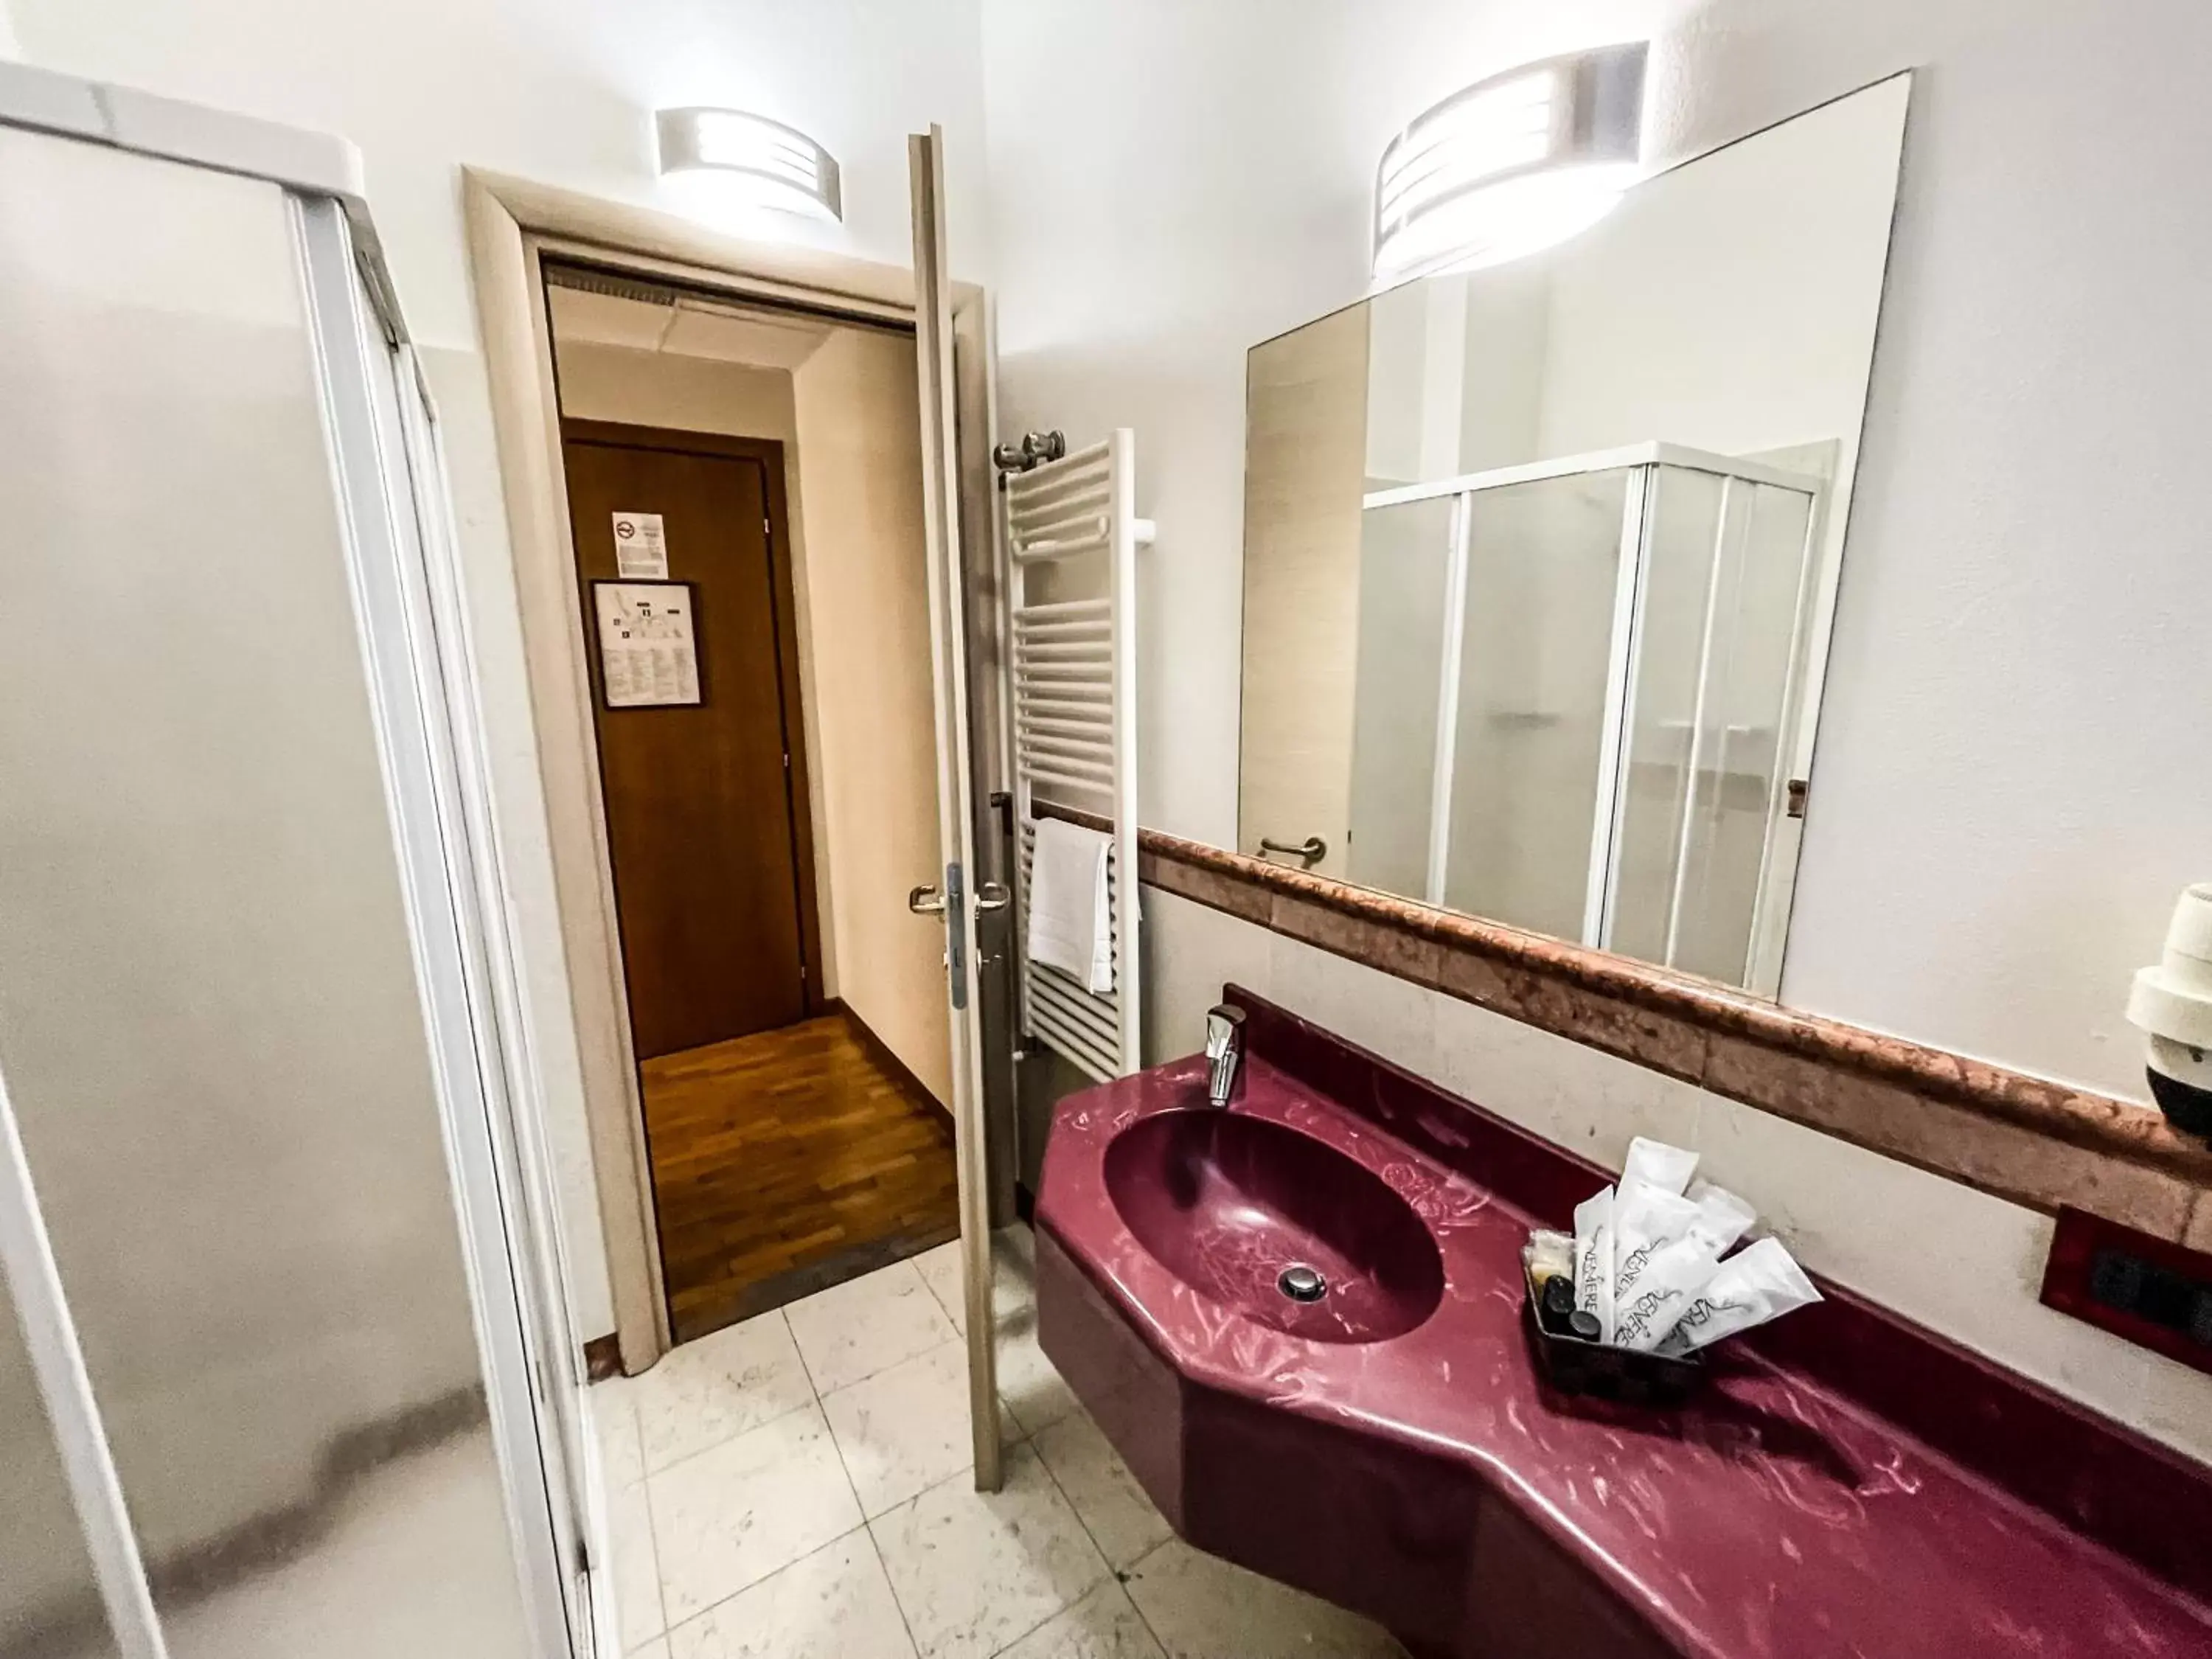 Bathroom in Hotel Elefante